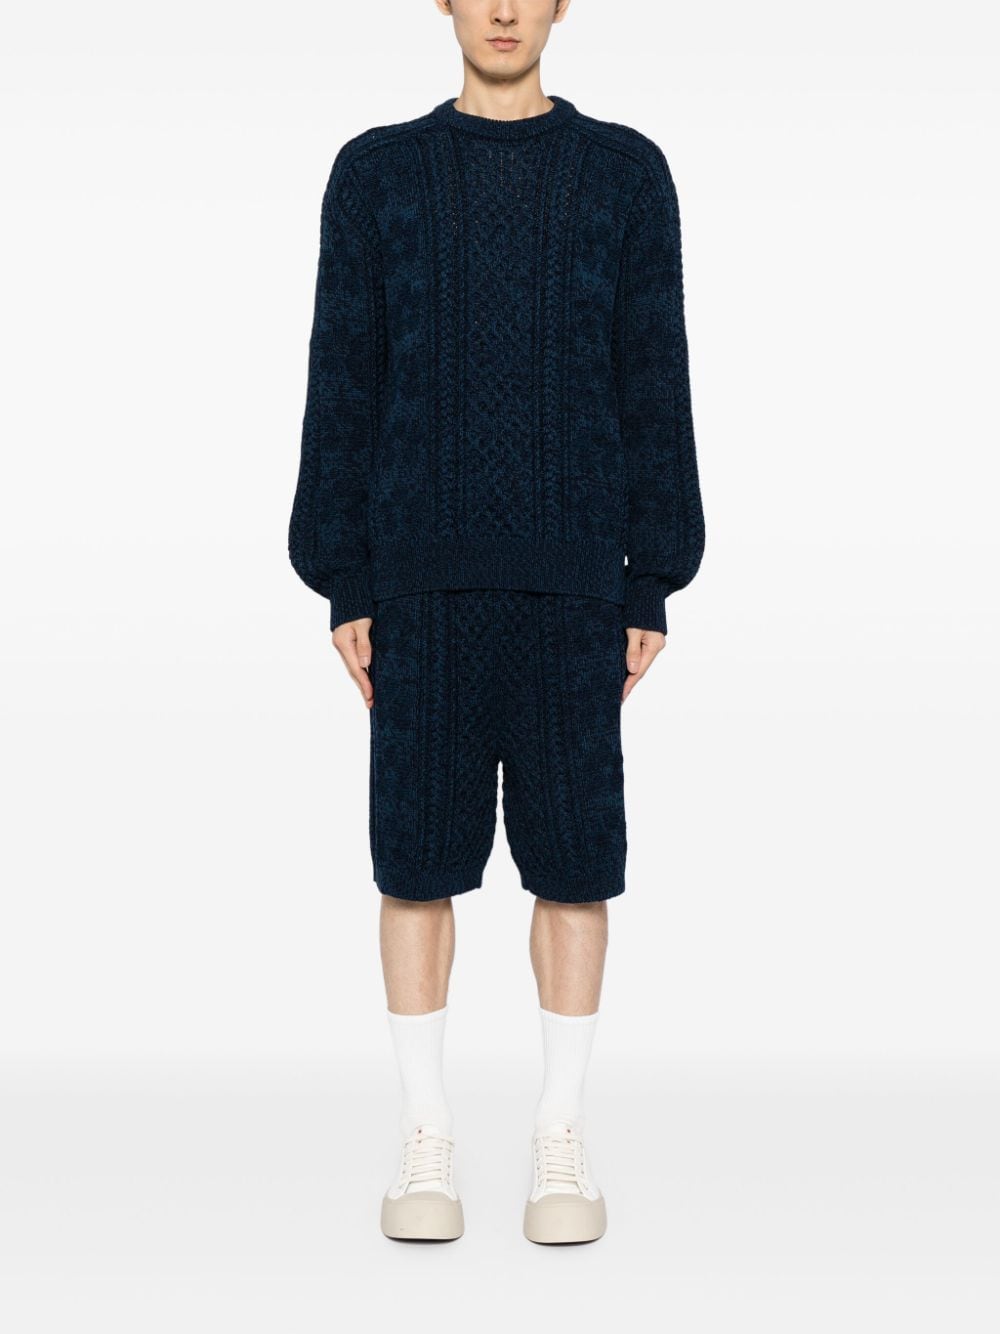 Marni knitted knee-length shorts - Blauw